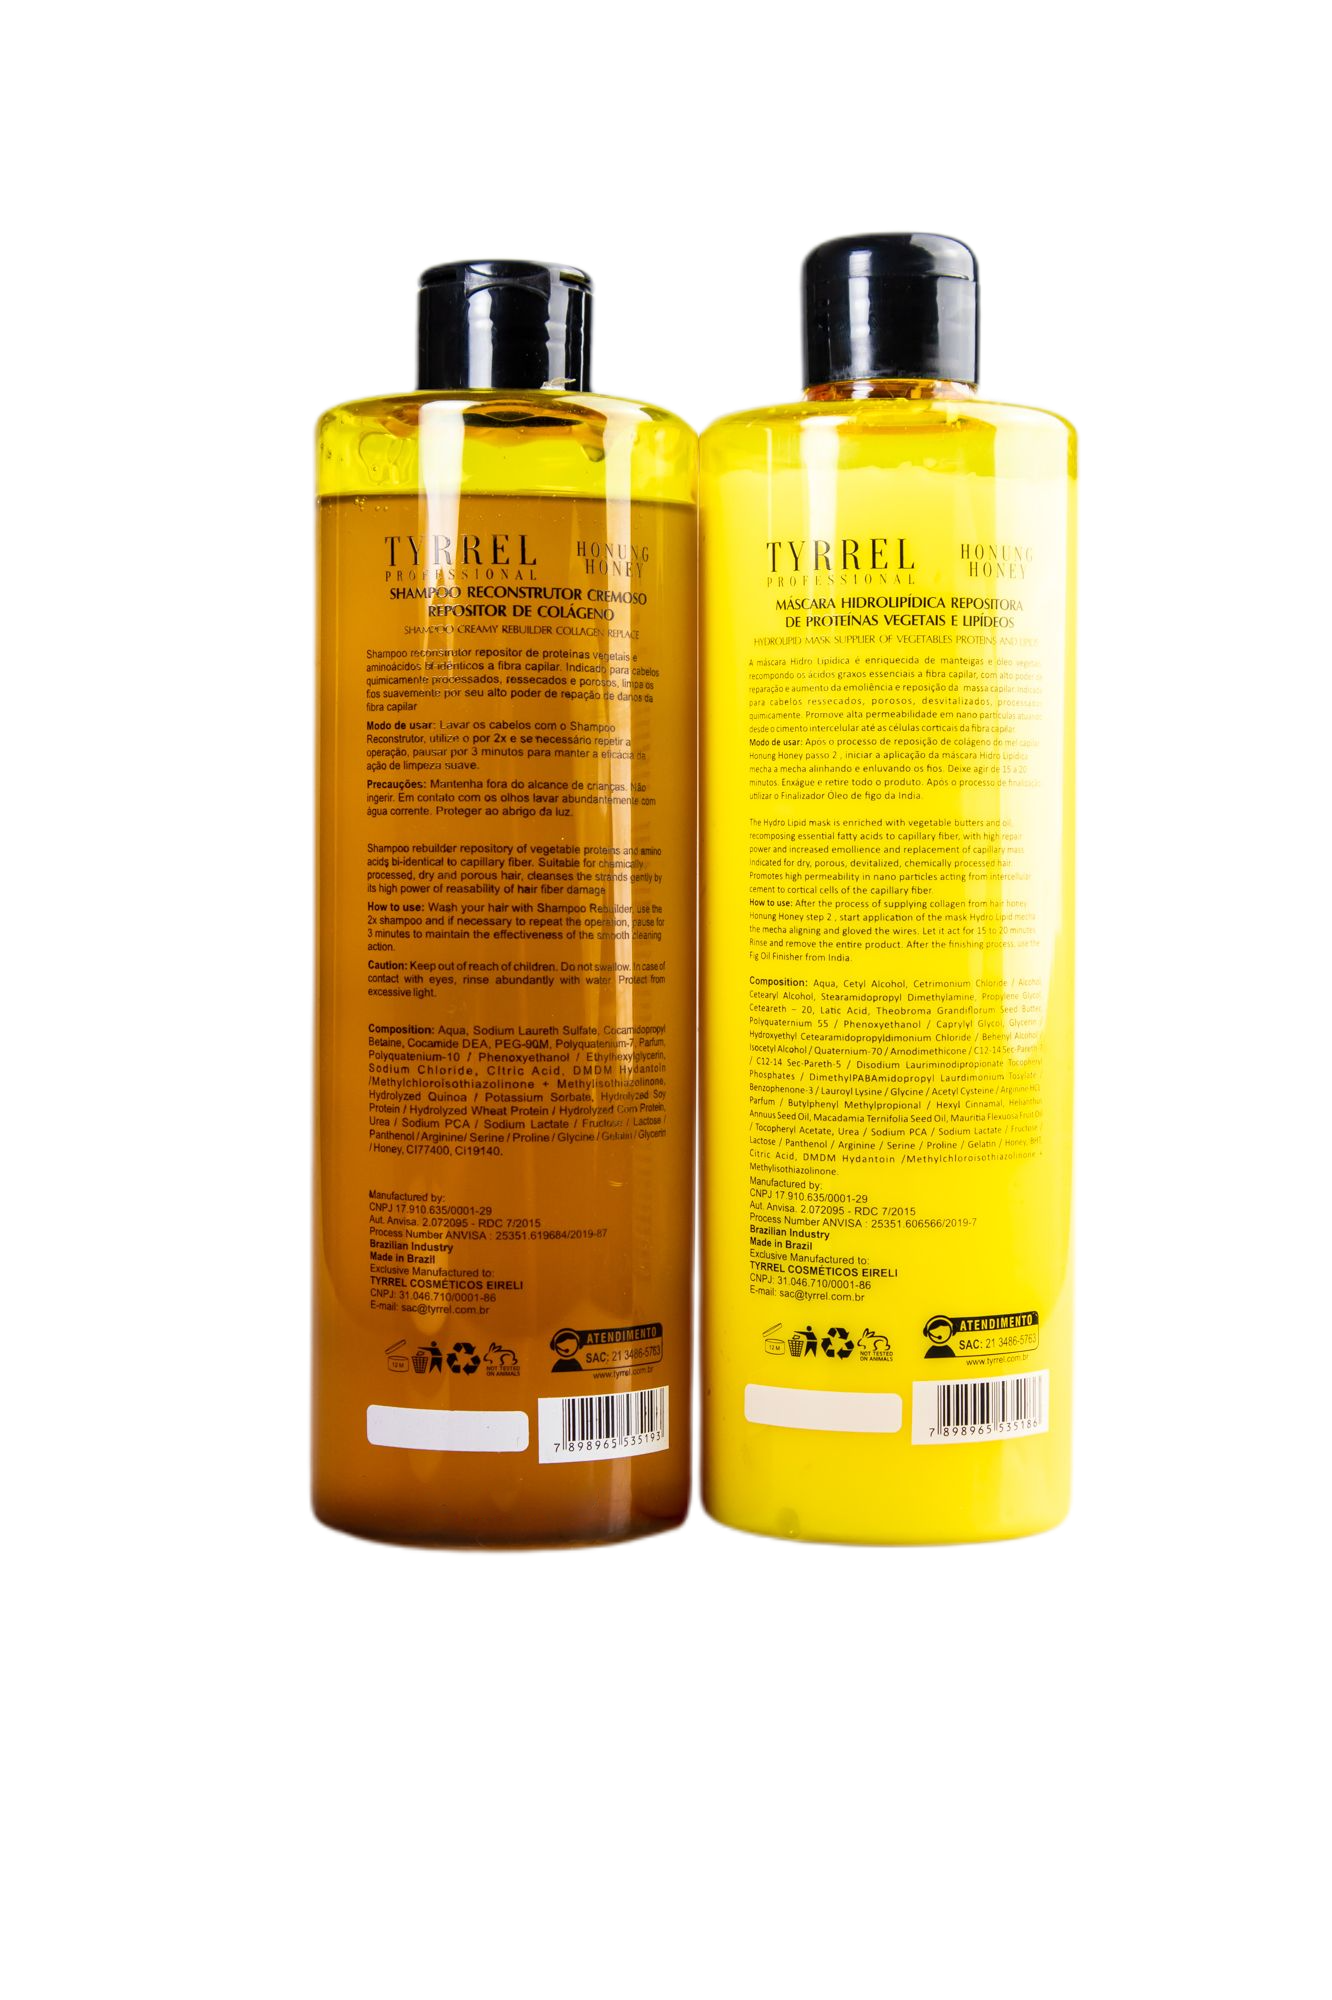 Tyrrel Brazilian Keratin Treatment Honung Honey Vegetable Proteins Lipids Collagen Replenisher Kit 2x500g - Tyrrel